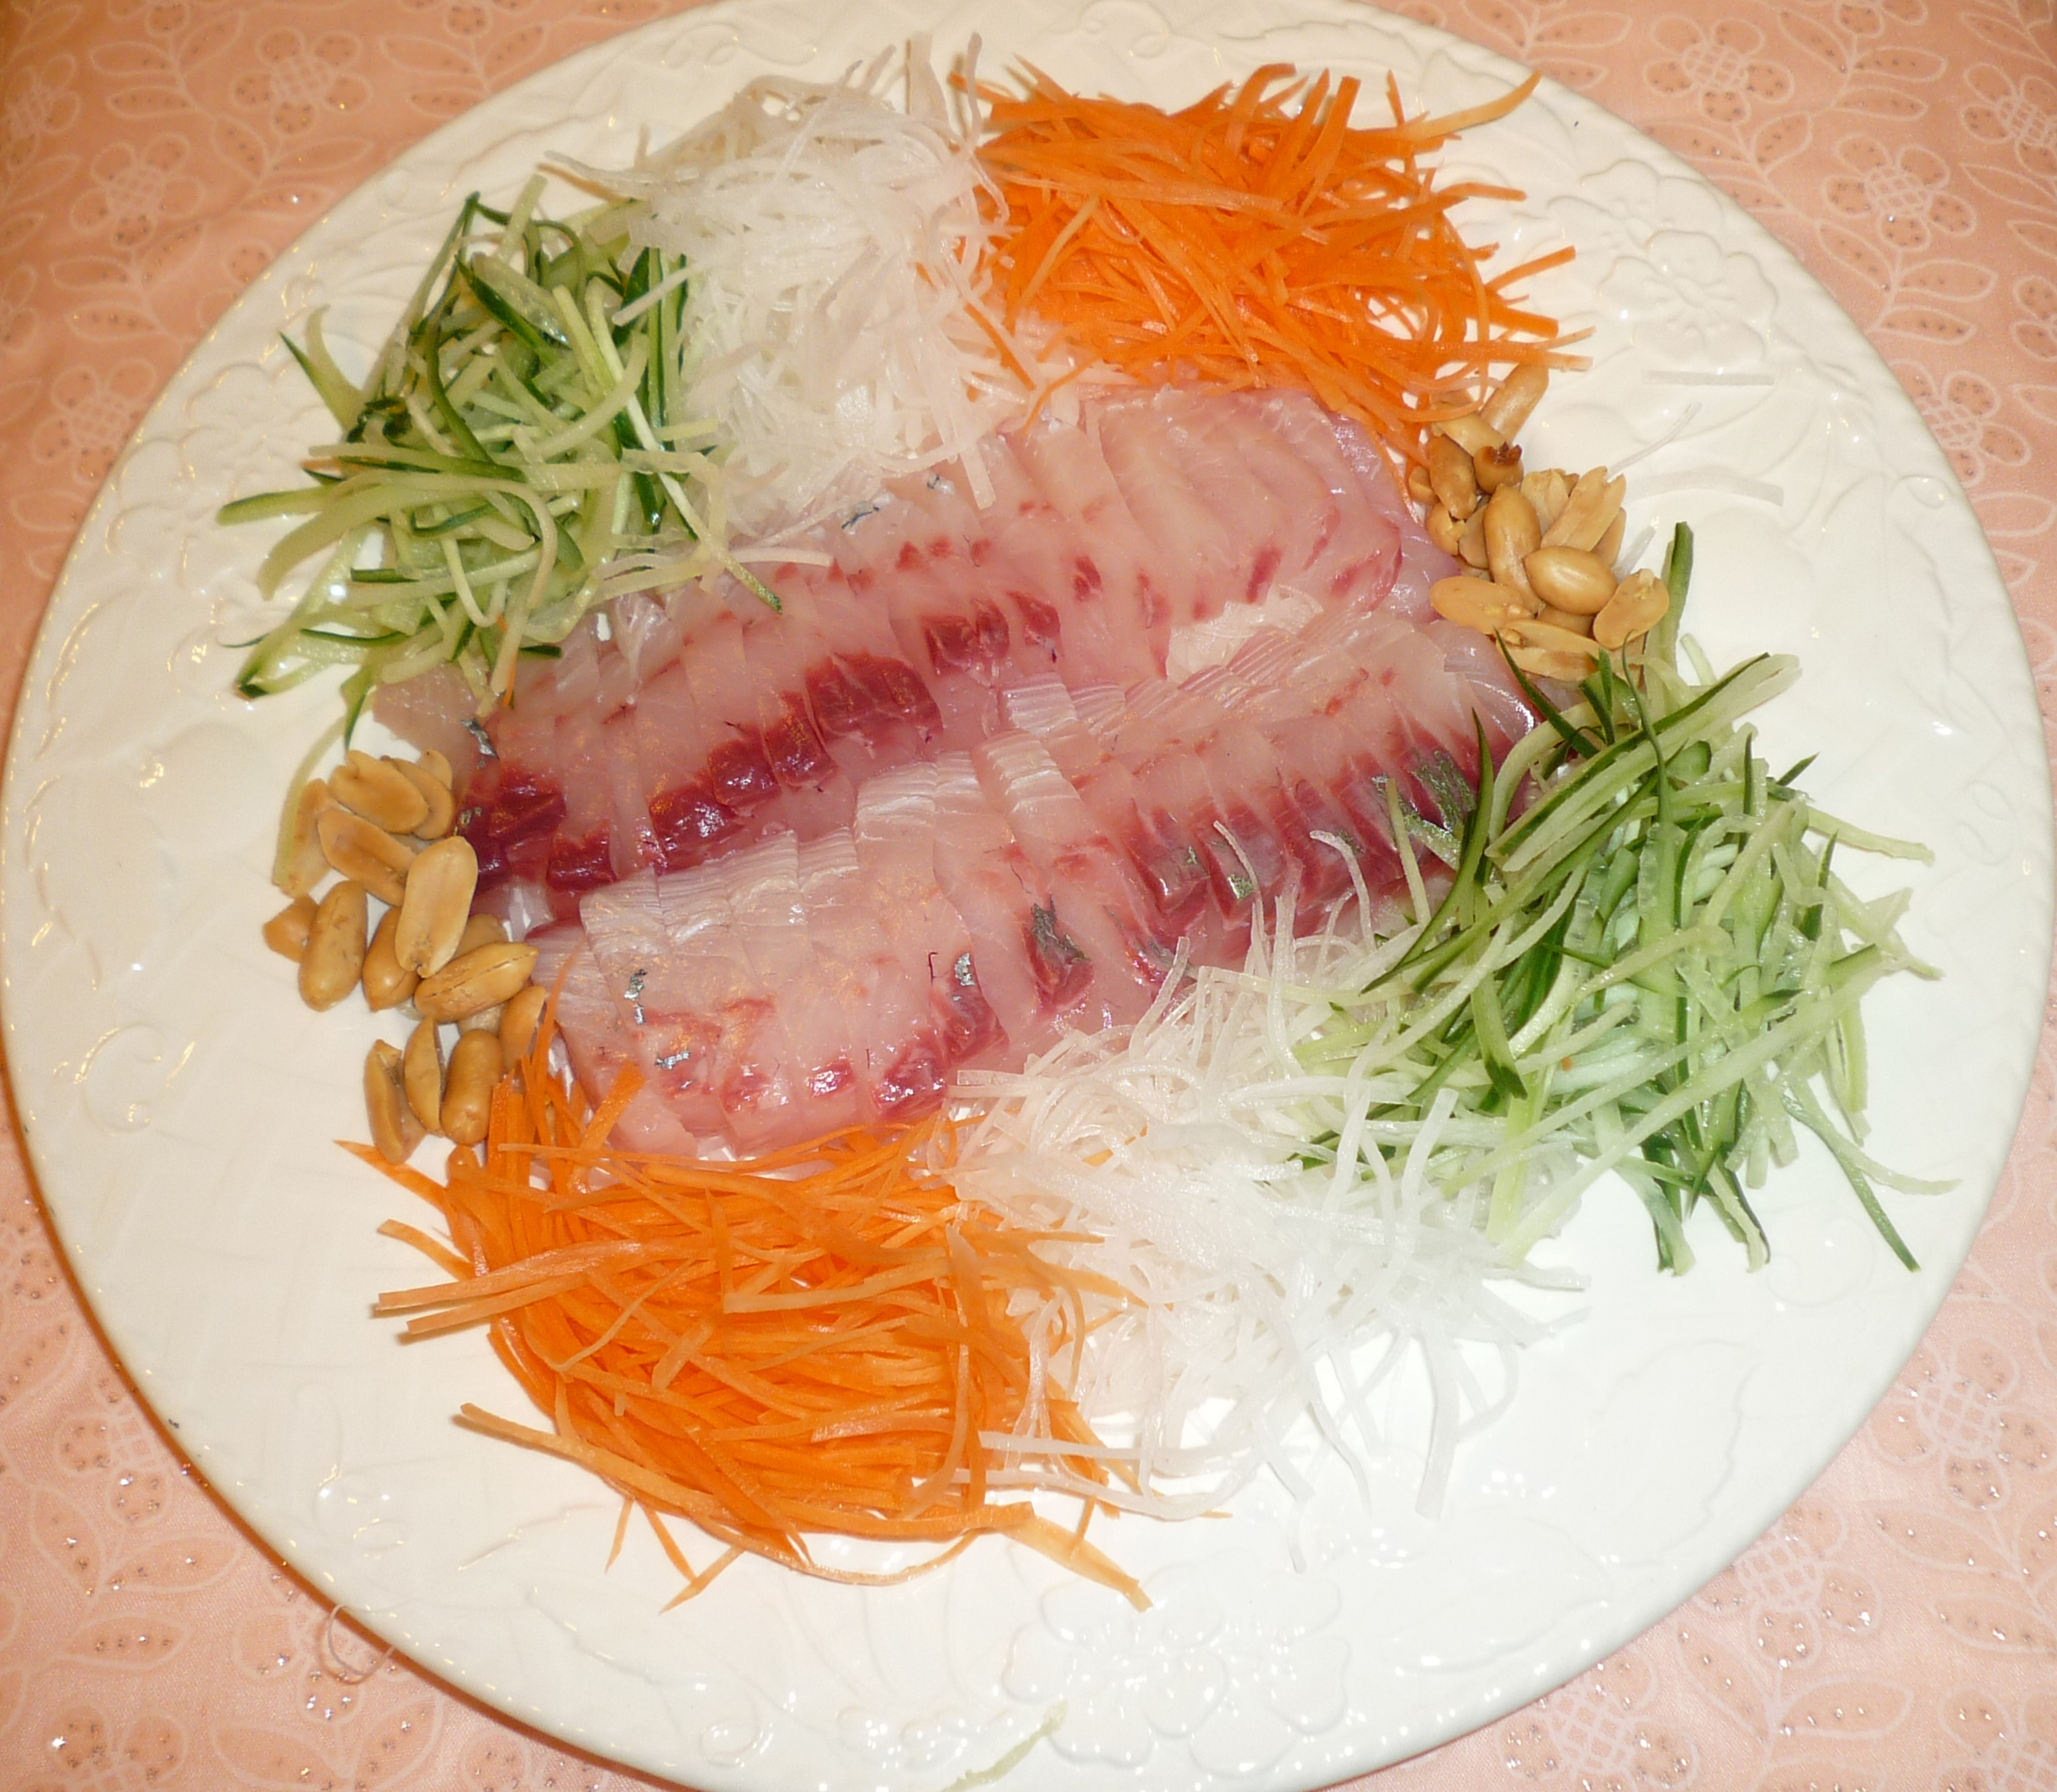 Osakana Cate お家で簡単 魚レシピ 旬の魚介料理をお手軽に 魚食普及推進センター 一般社団法人 大日本水産会